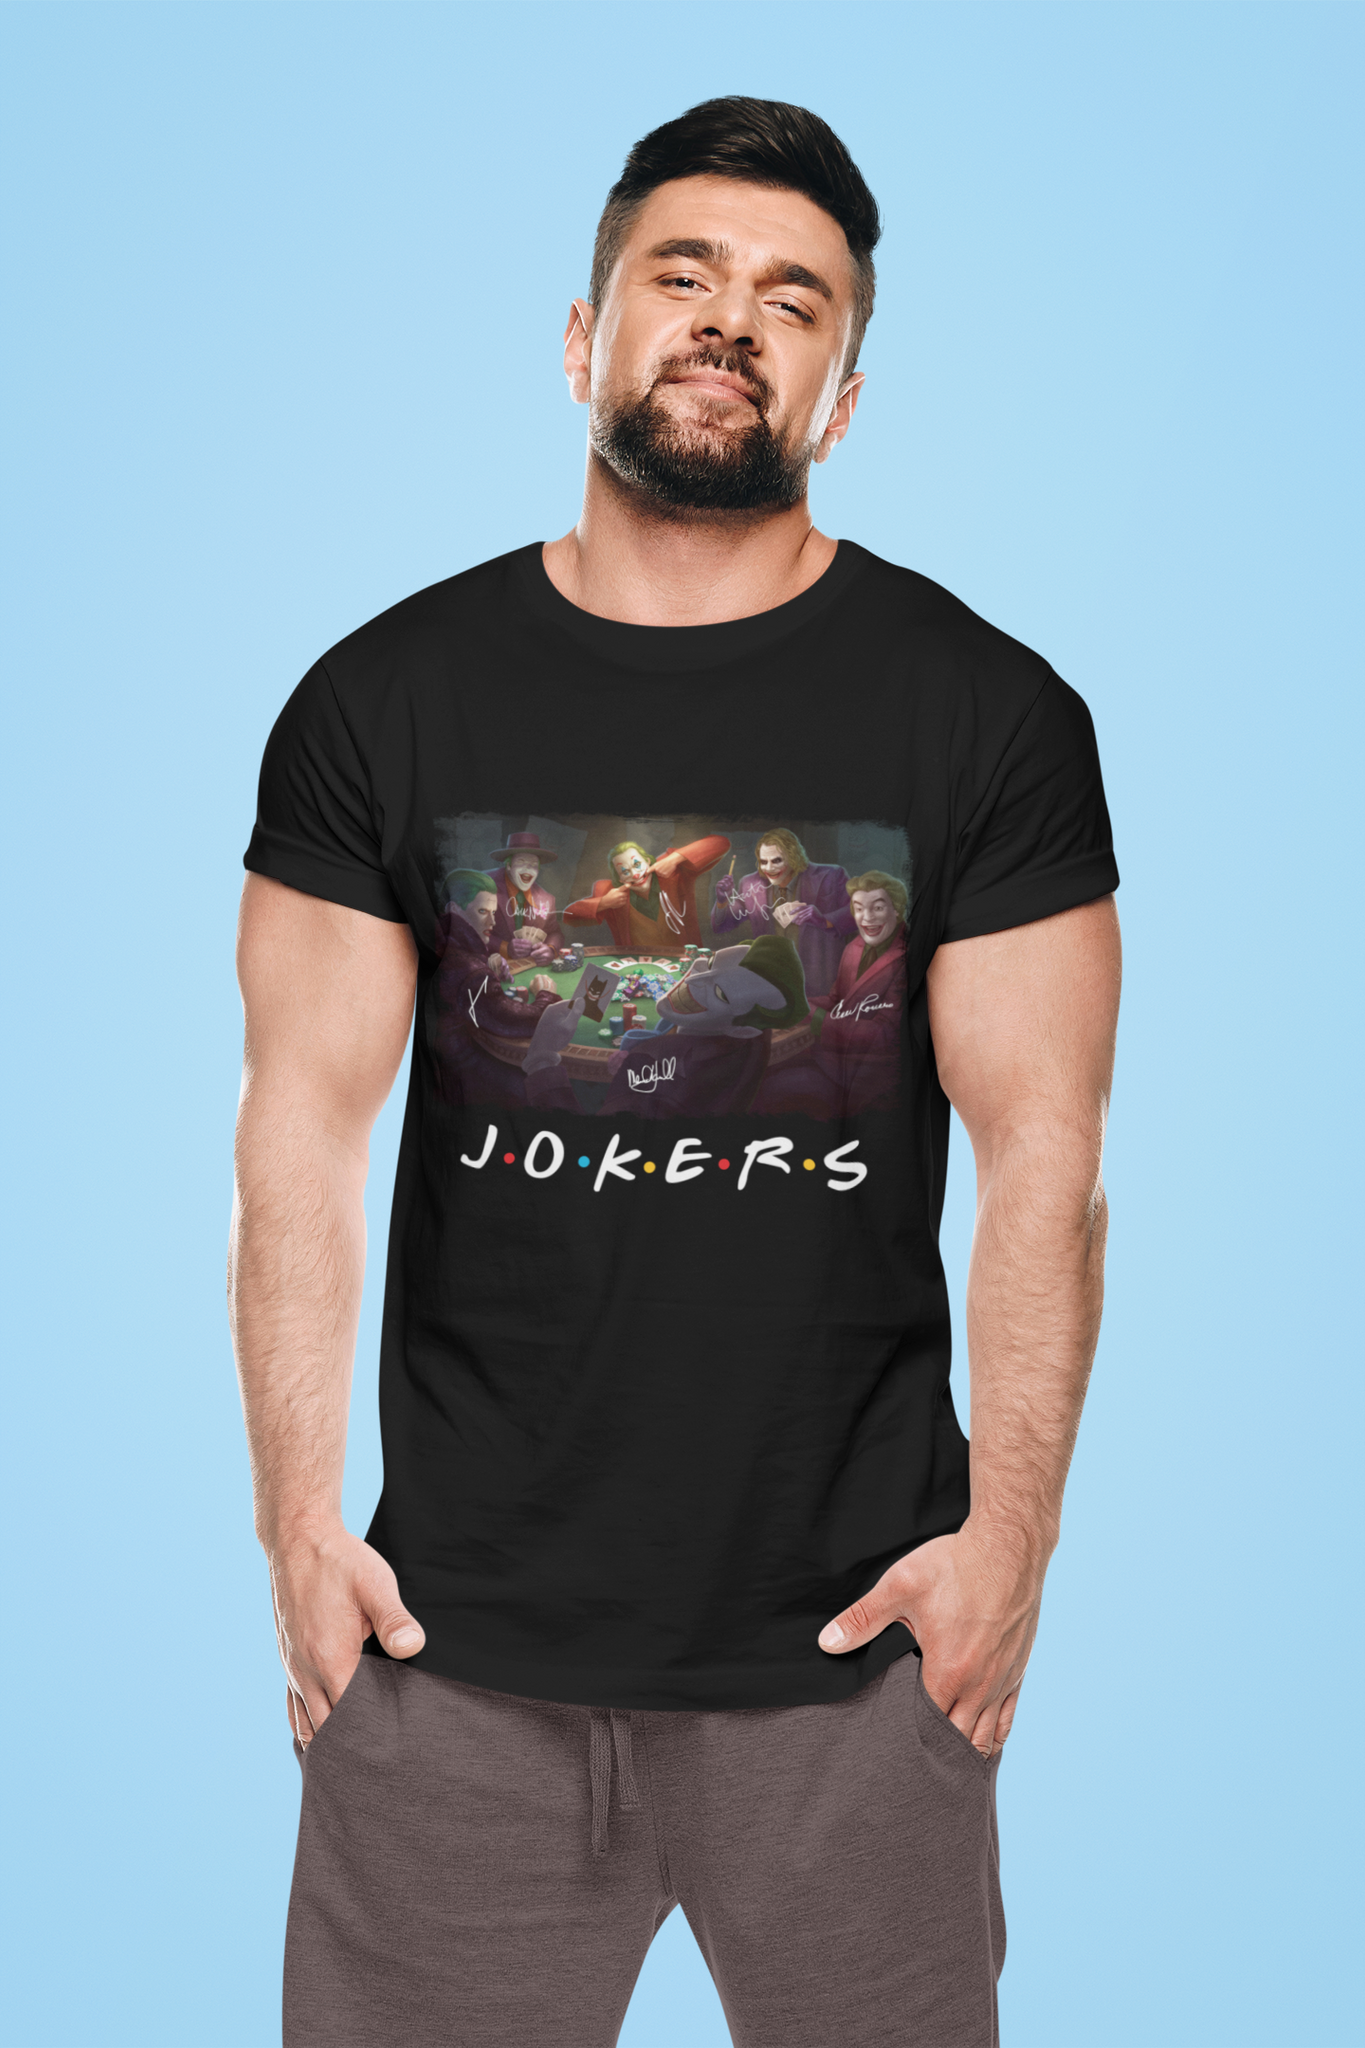 Joker T Shirt, Jokers The Maniac Comedian Psychopath Anarchist Clown Gangster T Shirt, Jokers Playing Card Tshirt, Halloween Gifts